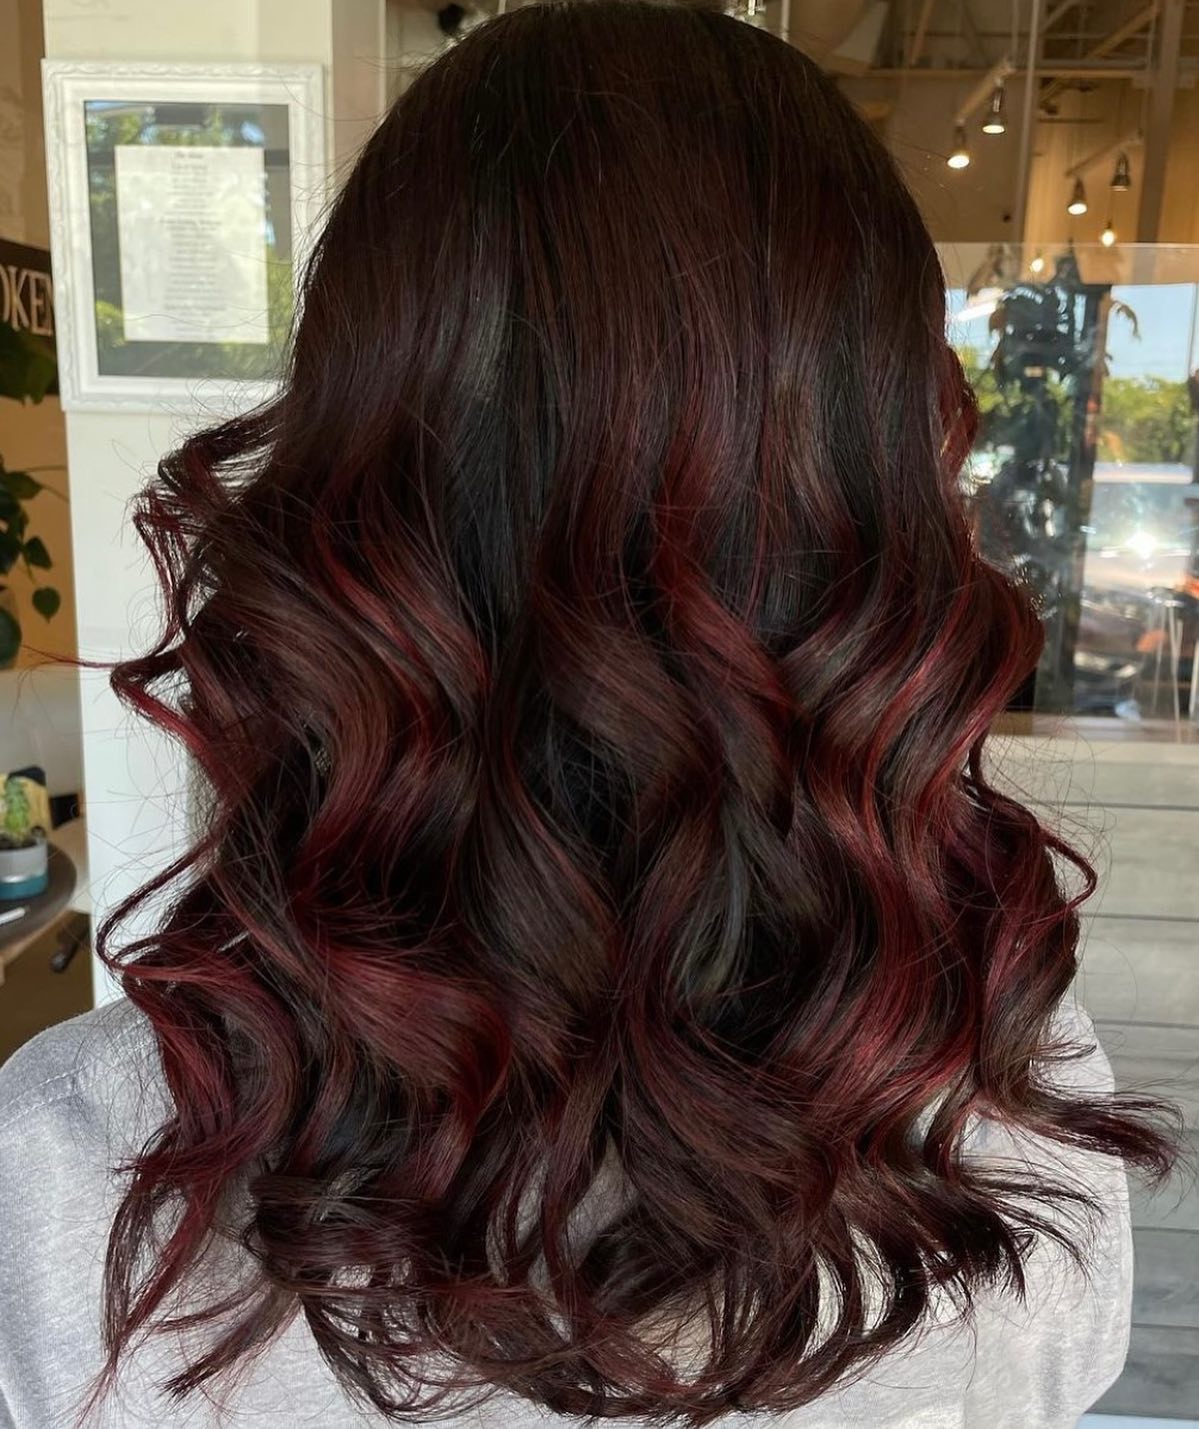 Dark Cherry Cola Hair Color